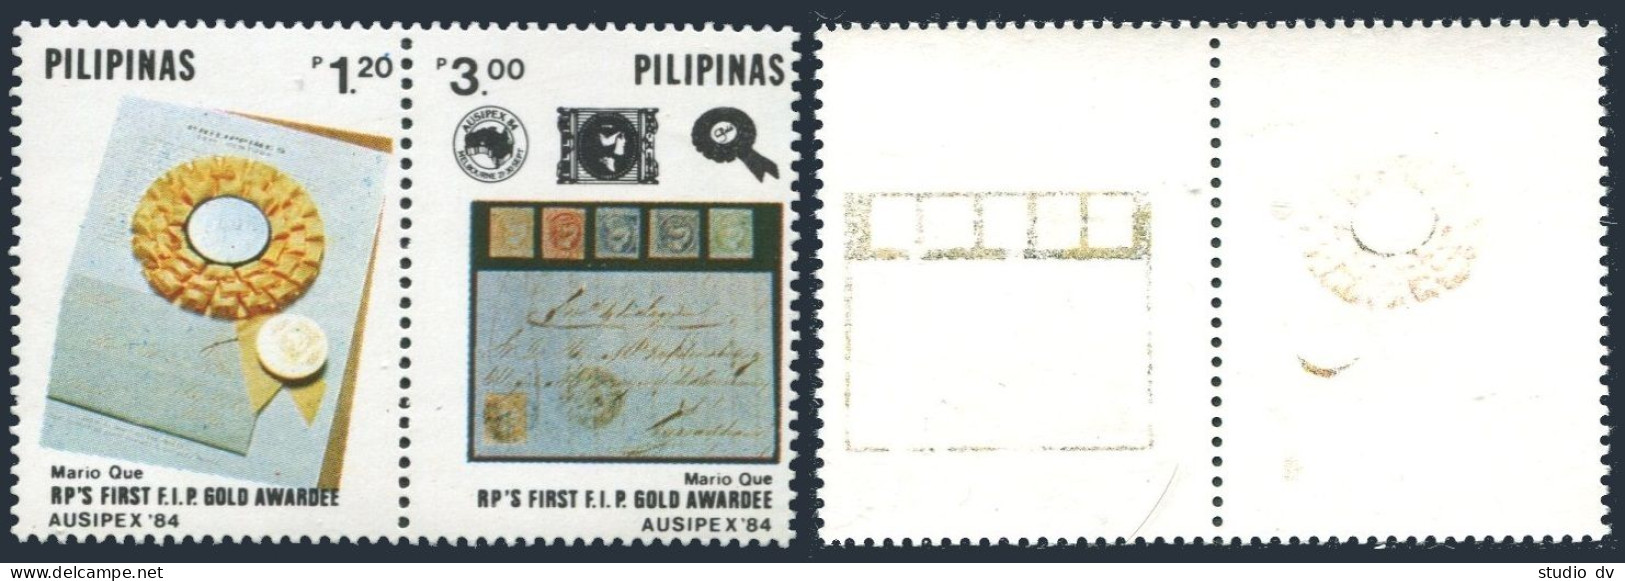 Philippines 1714-1715a Pair-offset, MNH. Michel 1627-1628. Philatelic Week 1984. - Philippines